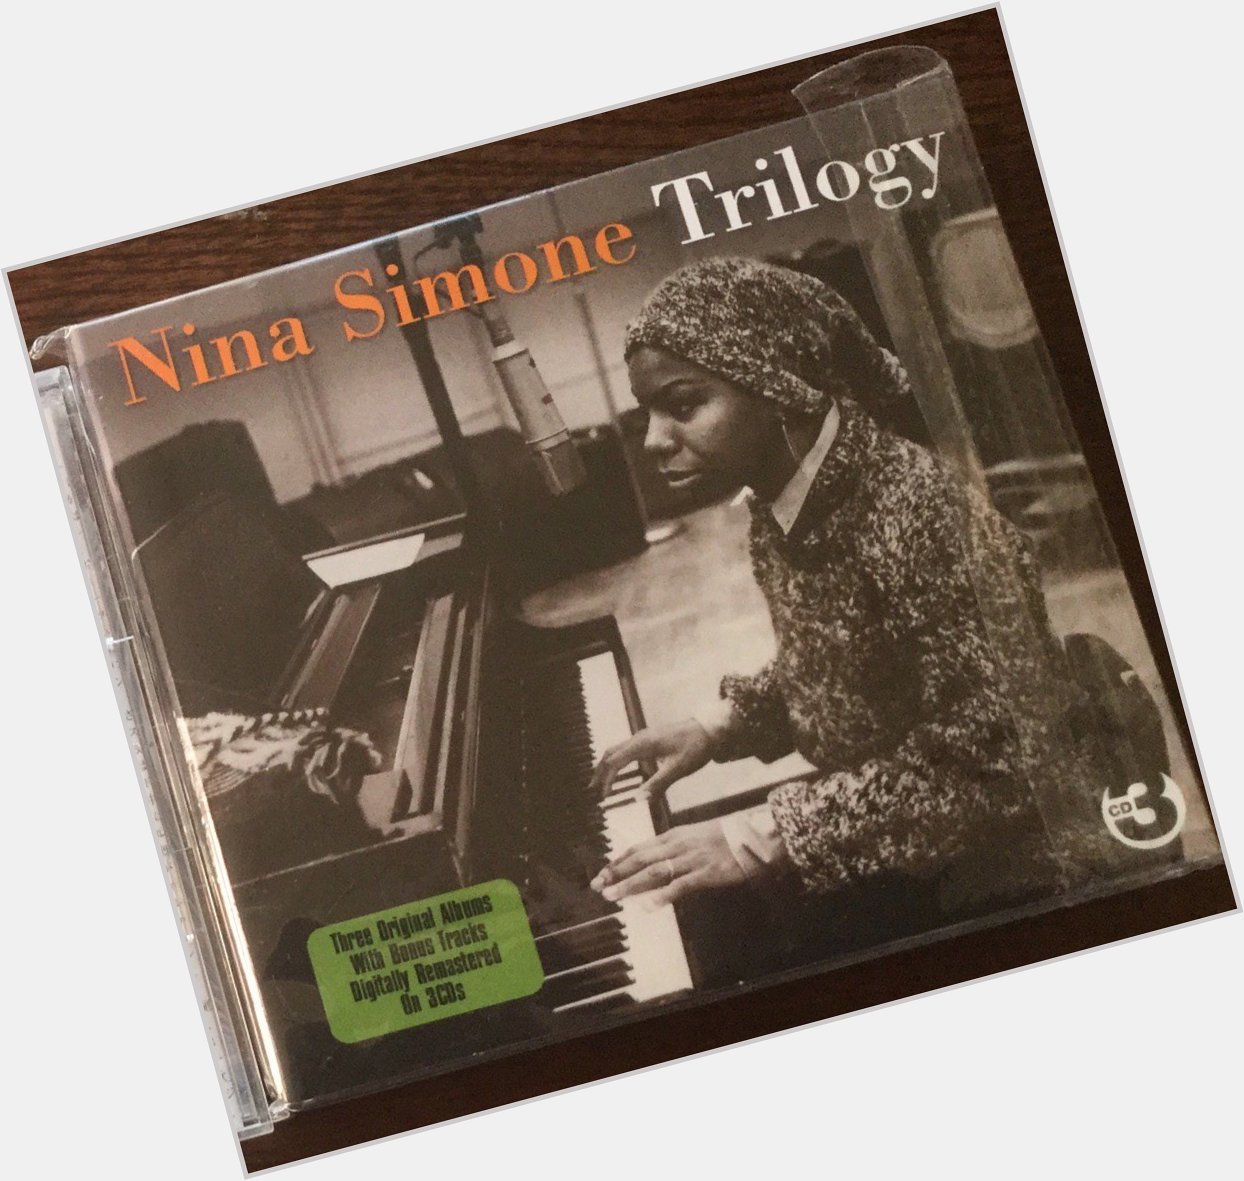   happy birthday. Nina Simone
& JERRY HARRISON
&   & Charlotte Church
& SCRAPPER BLACKWELL
& BOBBY CHARLES 